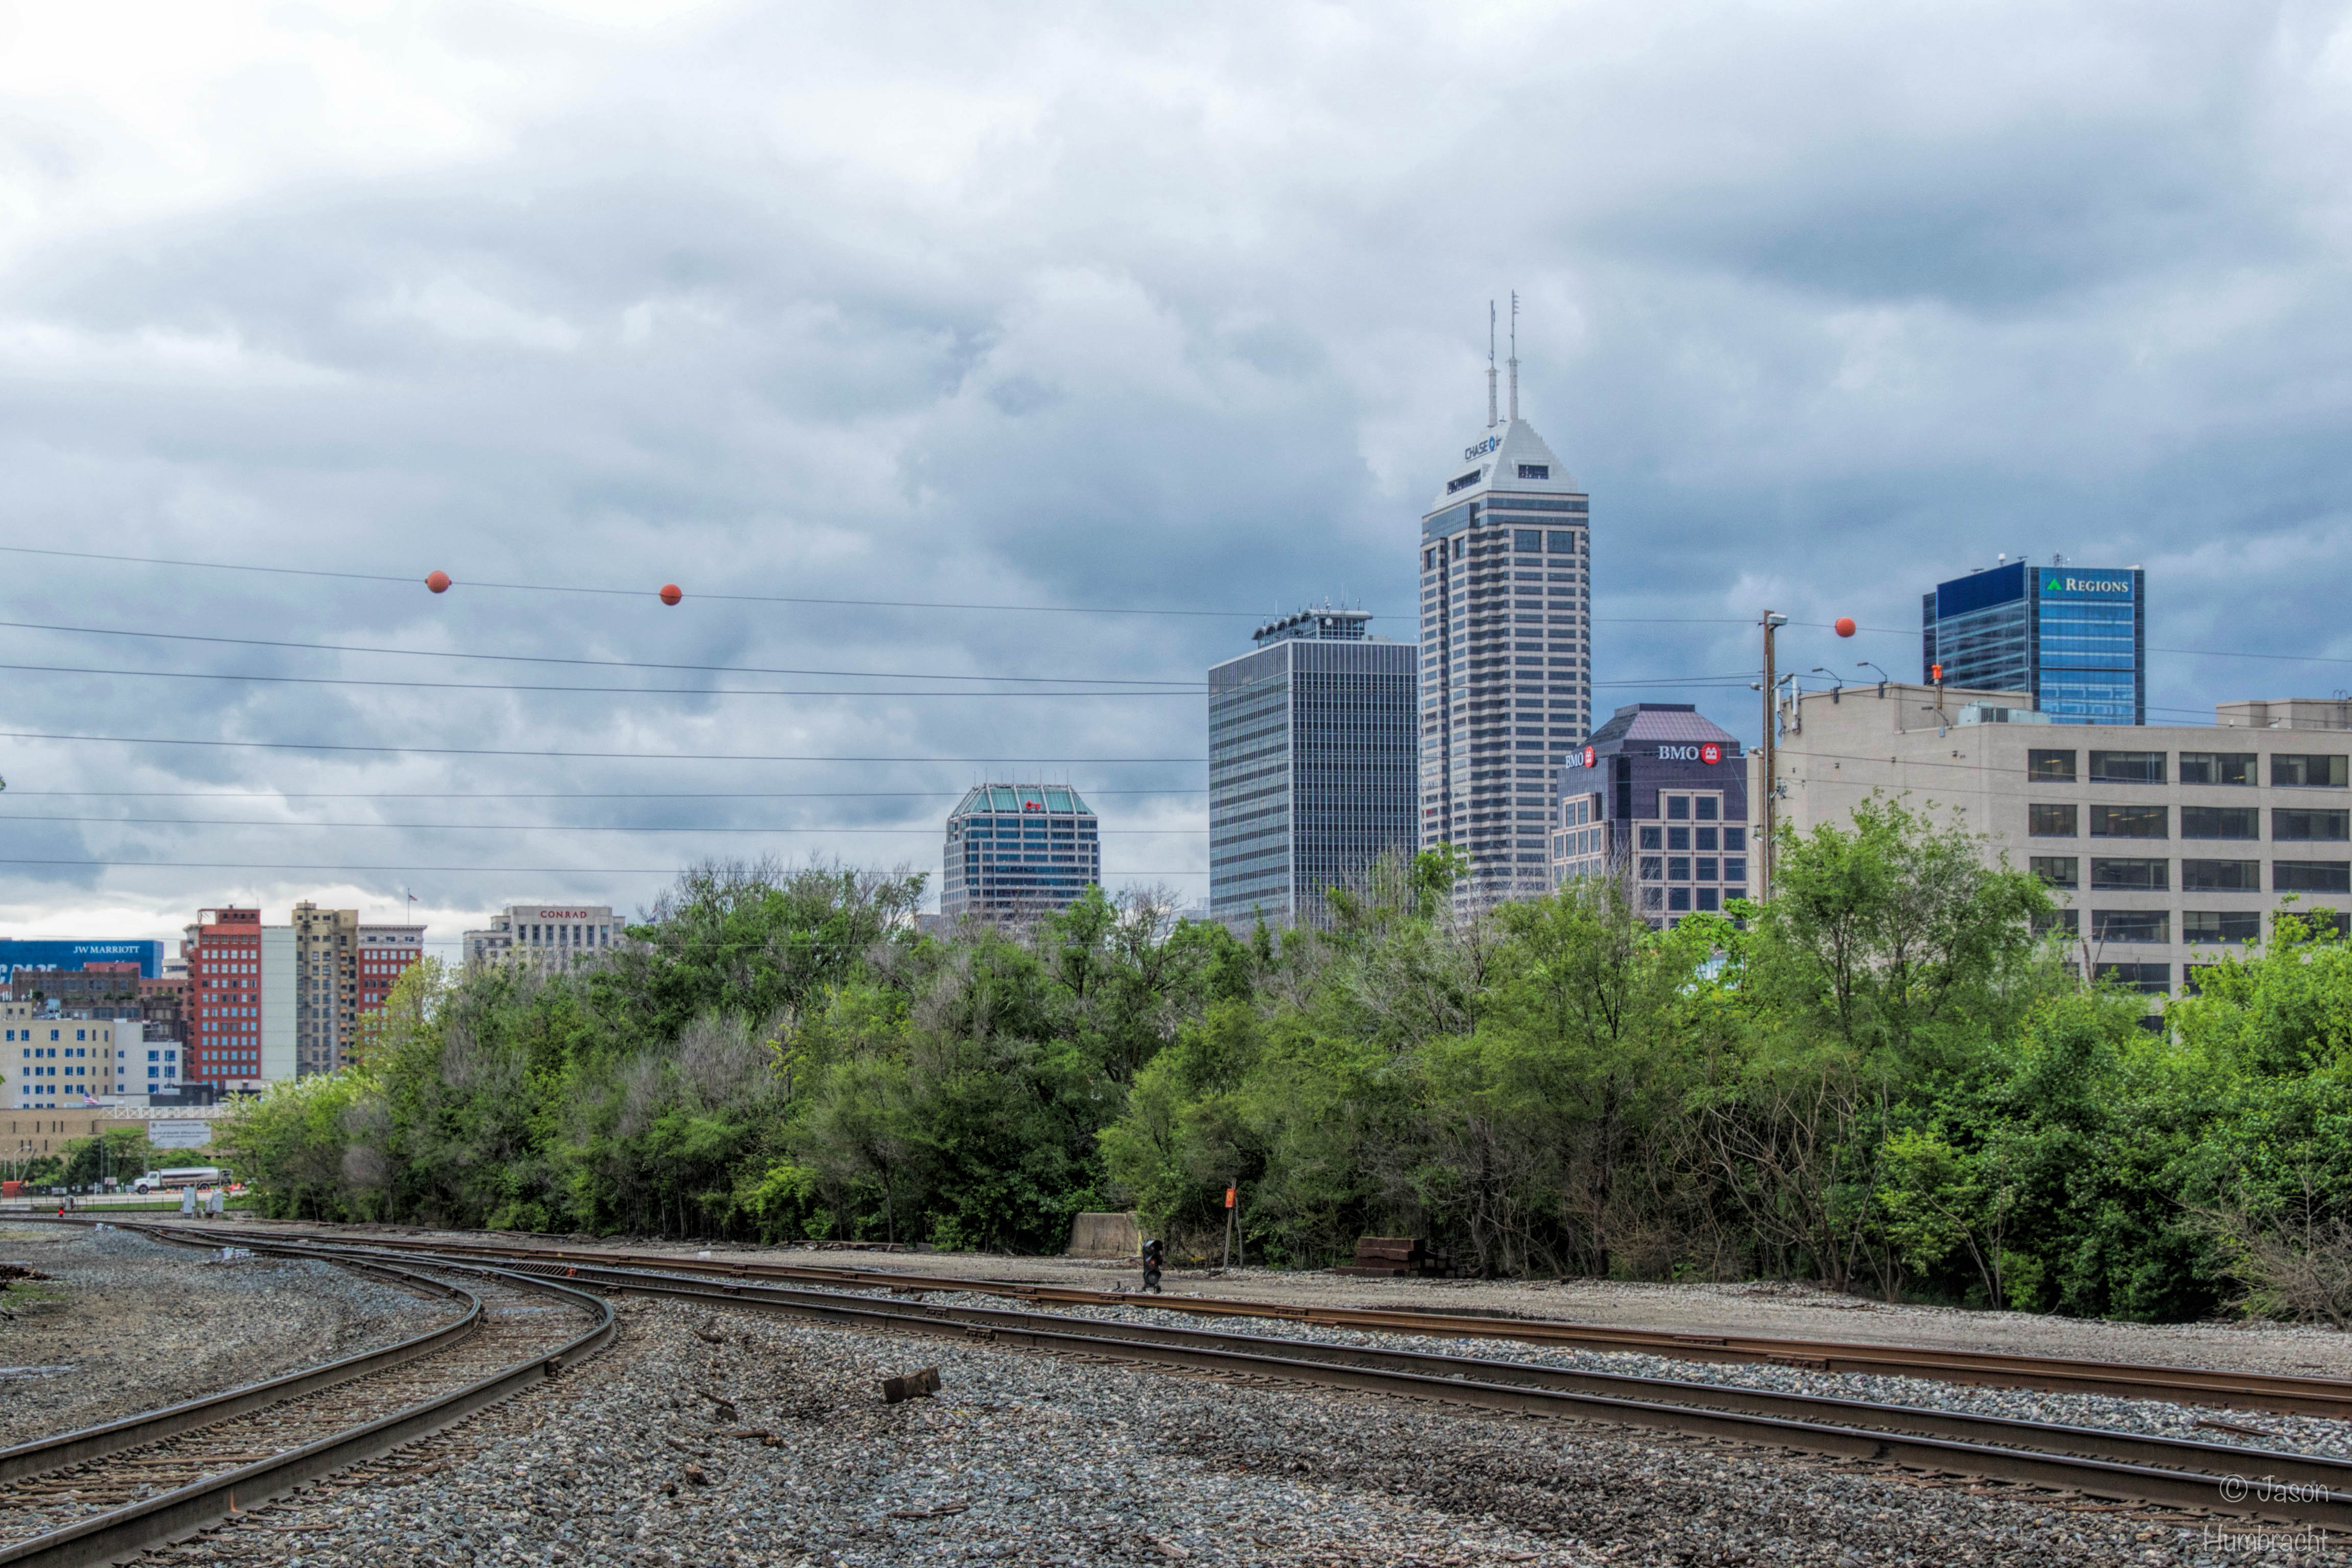 Train Tracks | Indianapolis Skyline | Image By Indiana Architectural Photographer Jason Humbracht